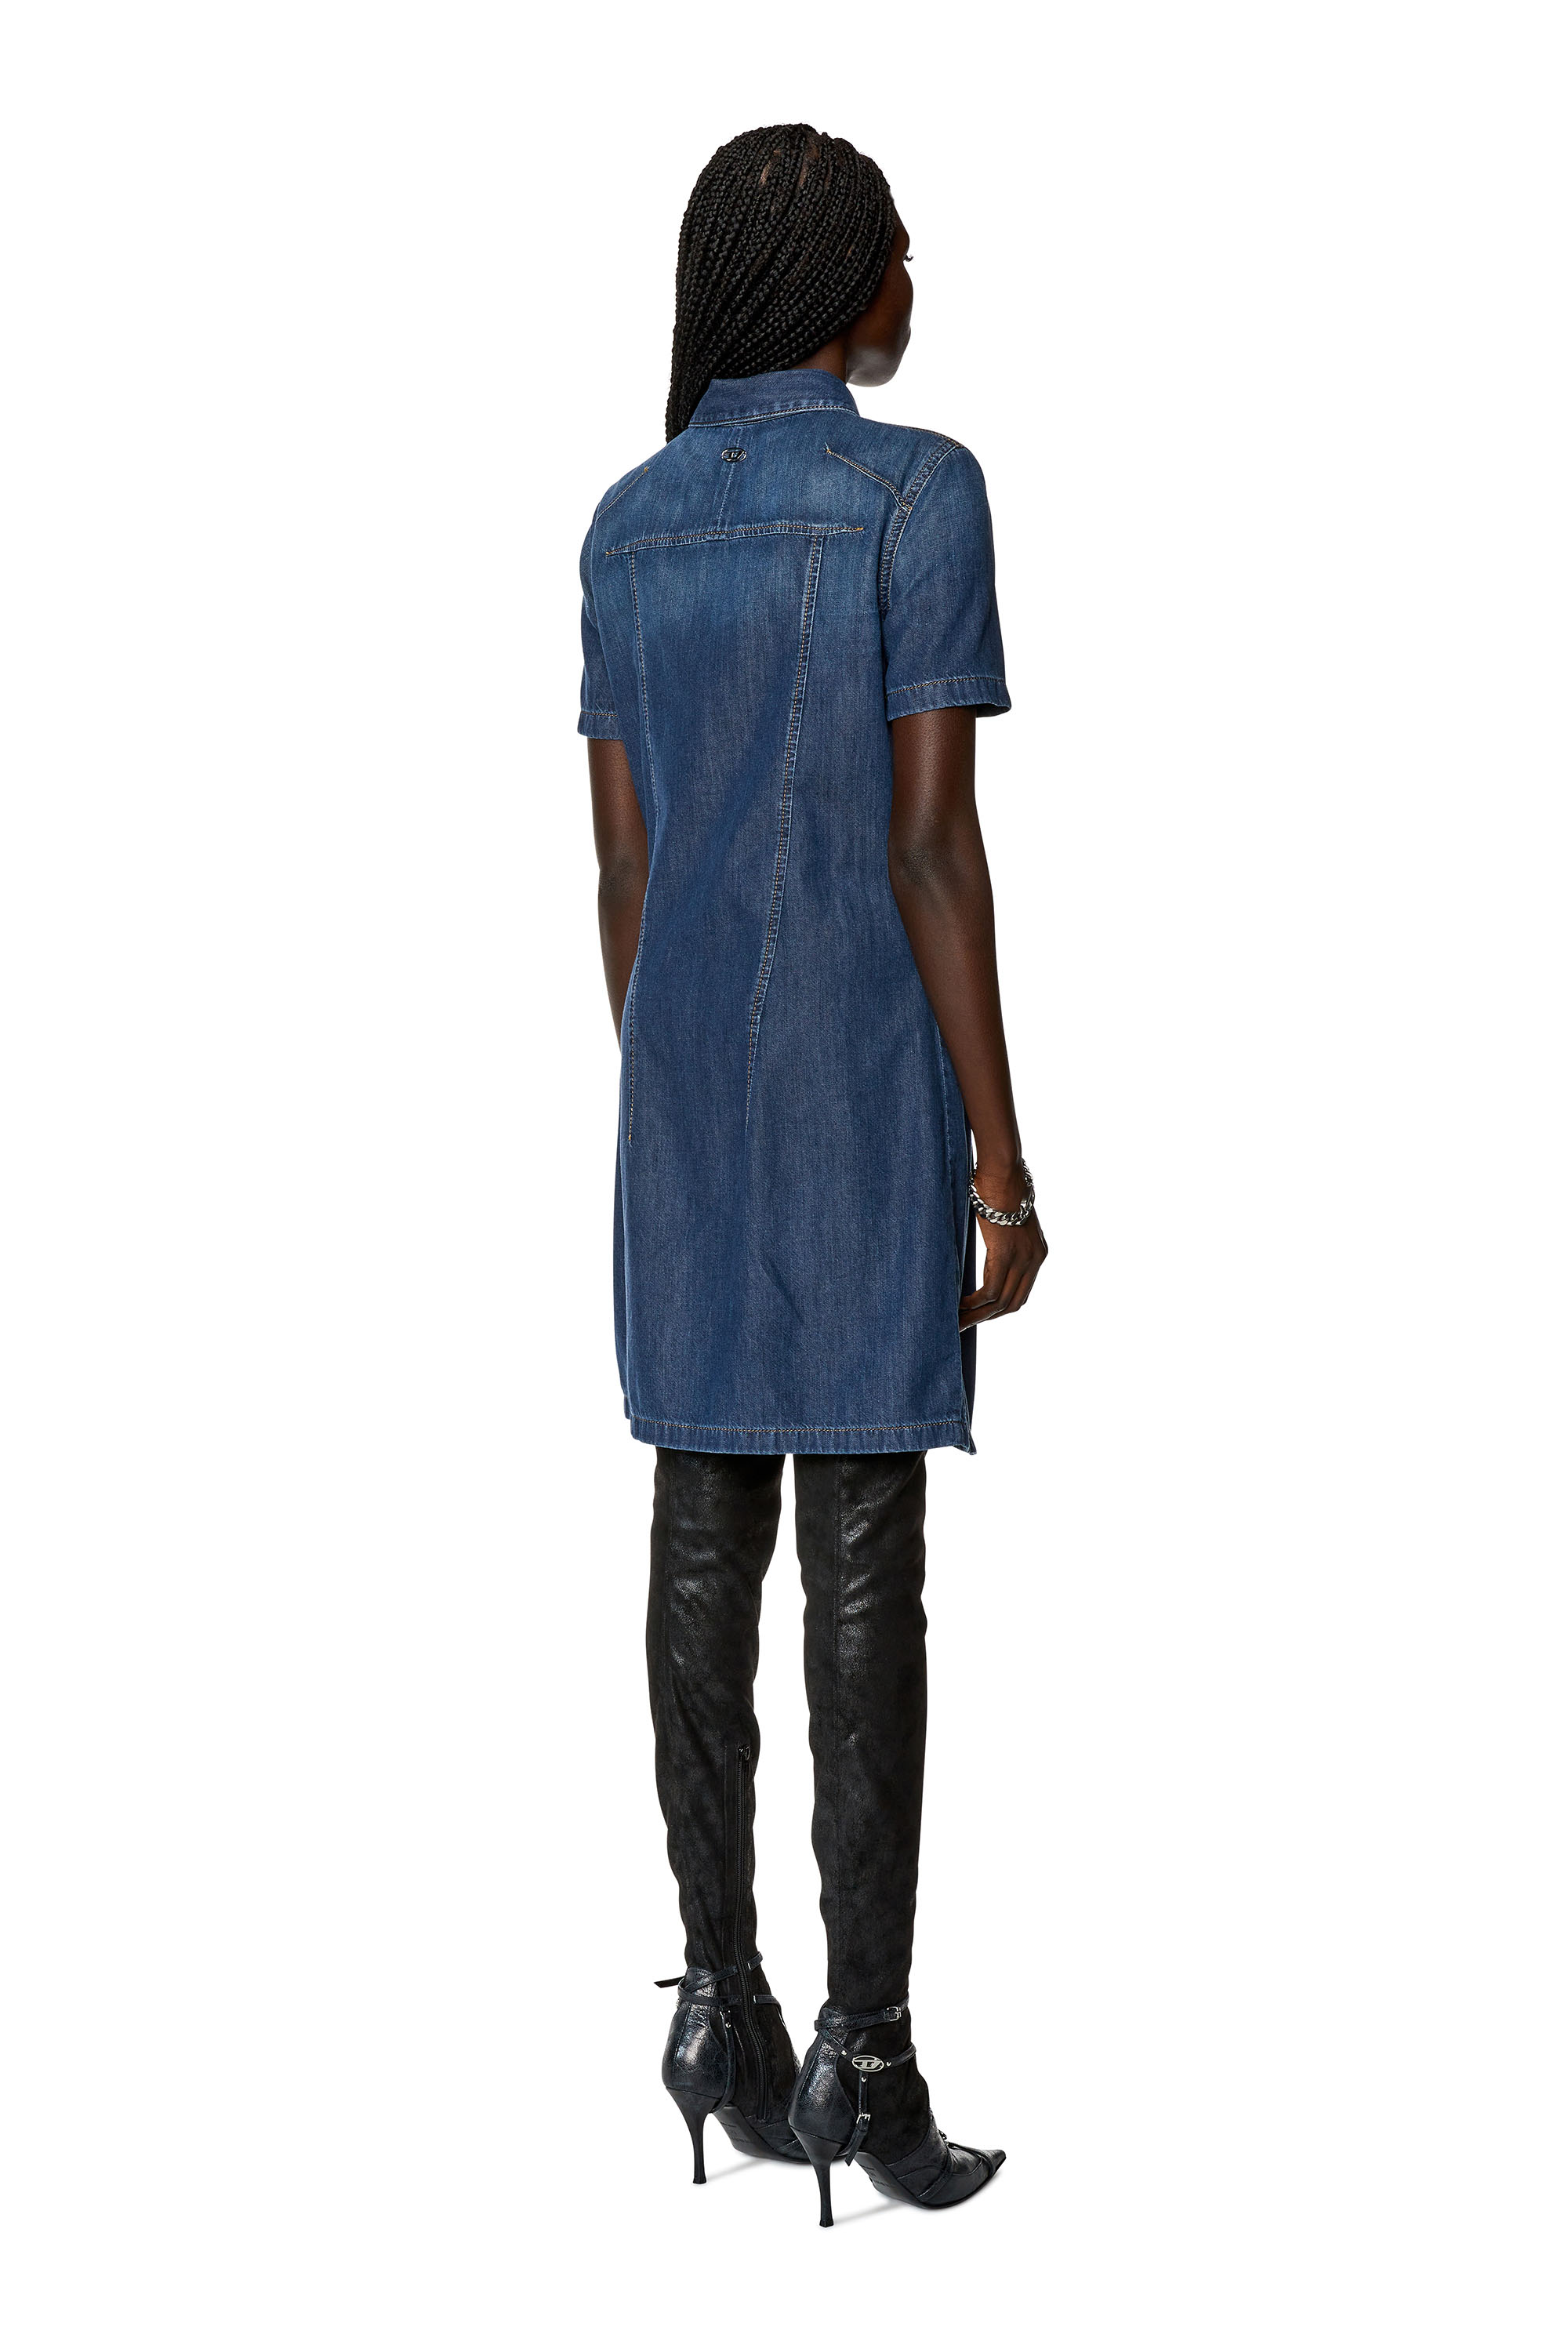 Diesel - DE-SHIRTY, Woman Buttoned shirt dress in stretch denim in Blue - Image 3